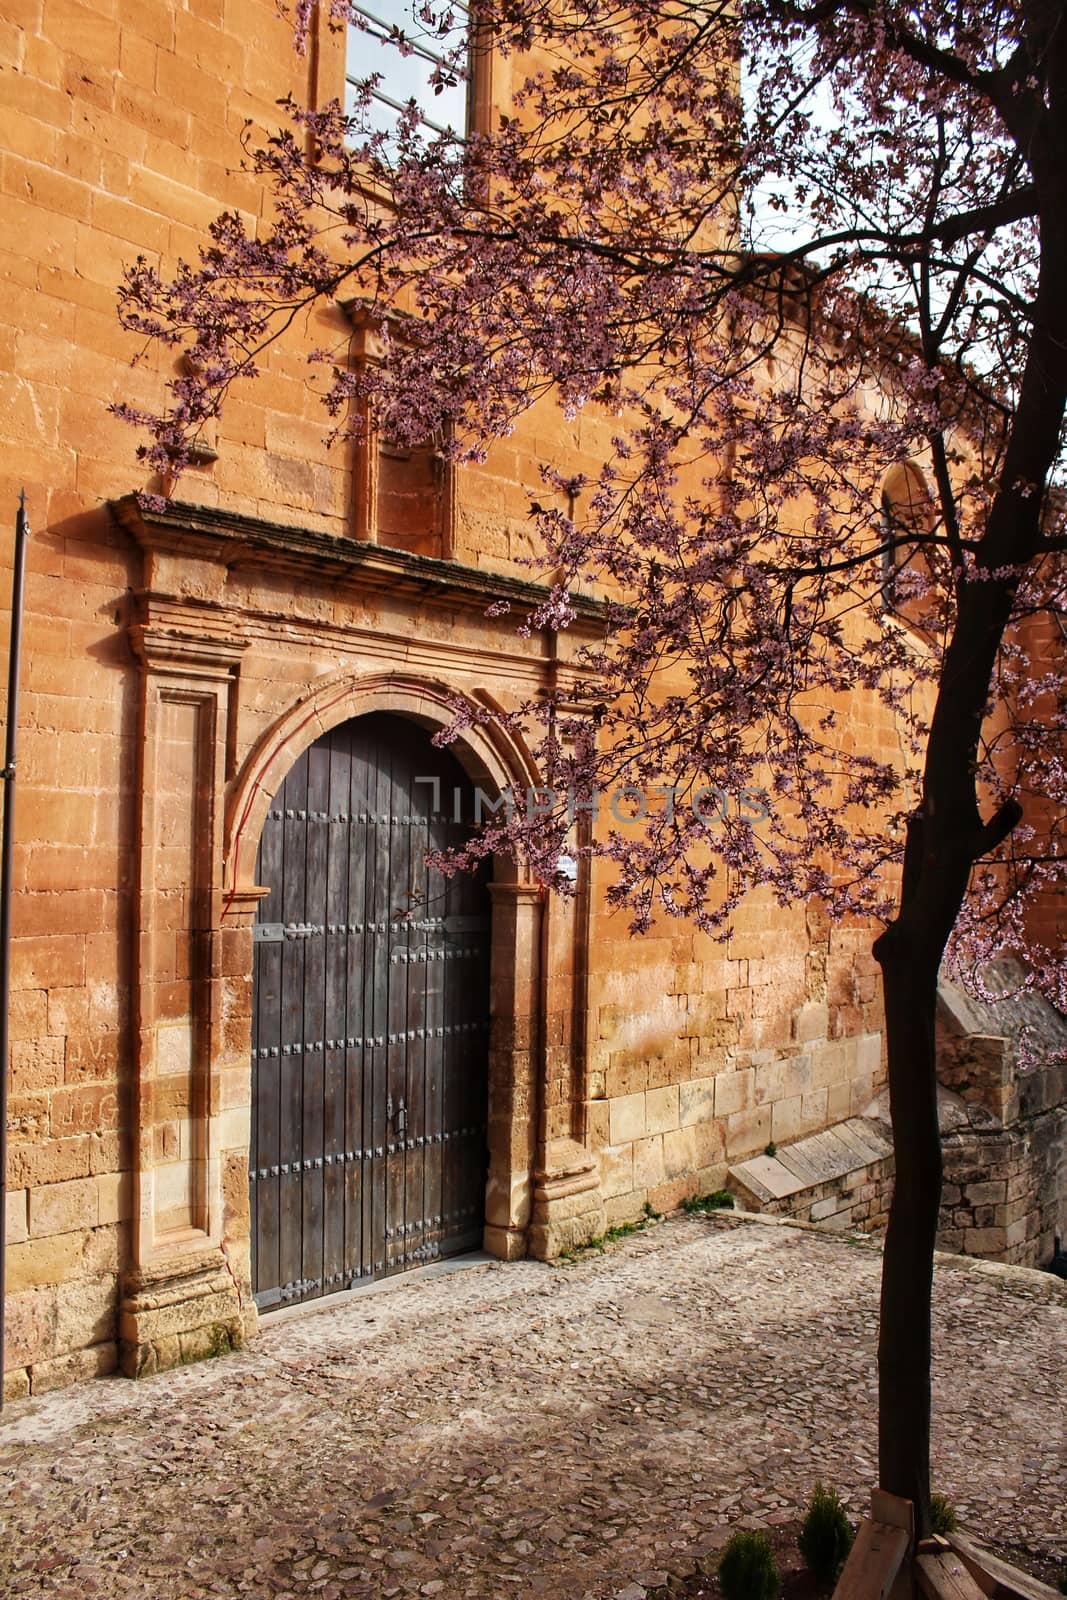 Cherry tree in bloom next to San Miguel Arcangel parish in Alcaraz by soniabonet